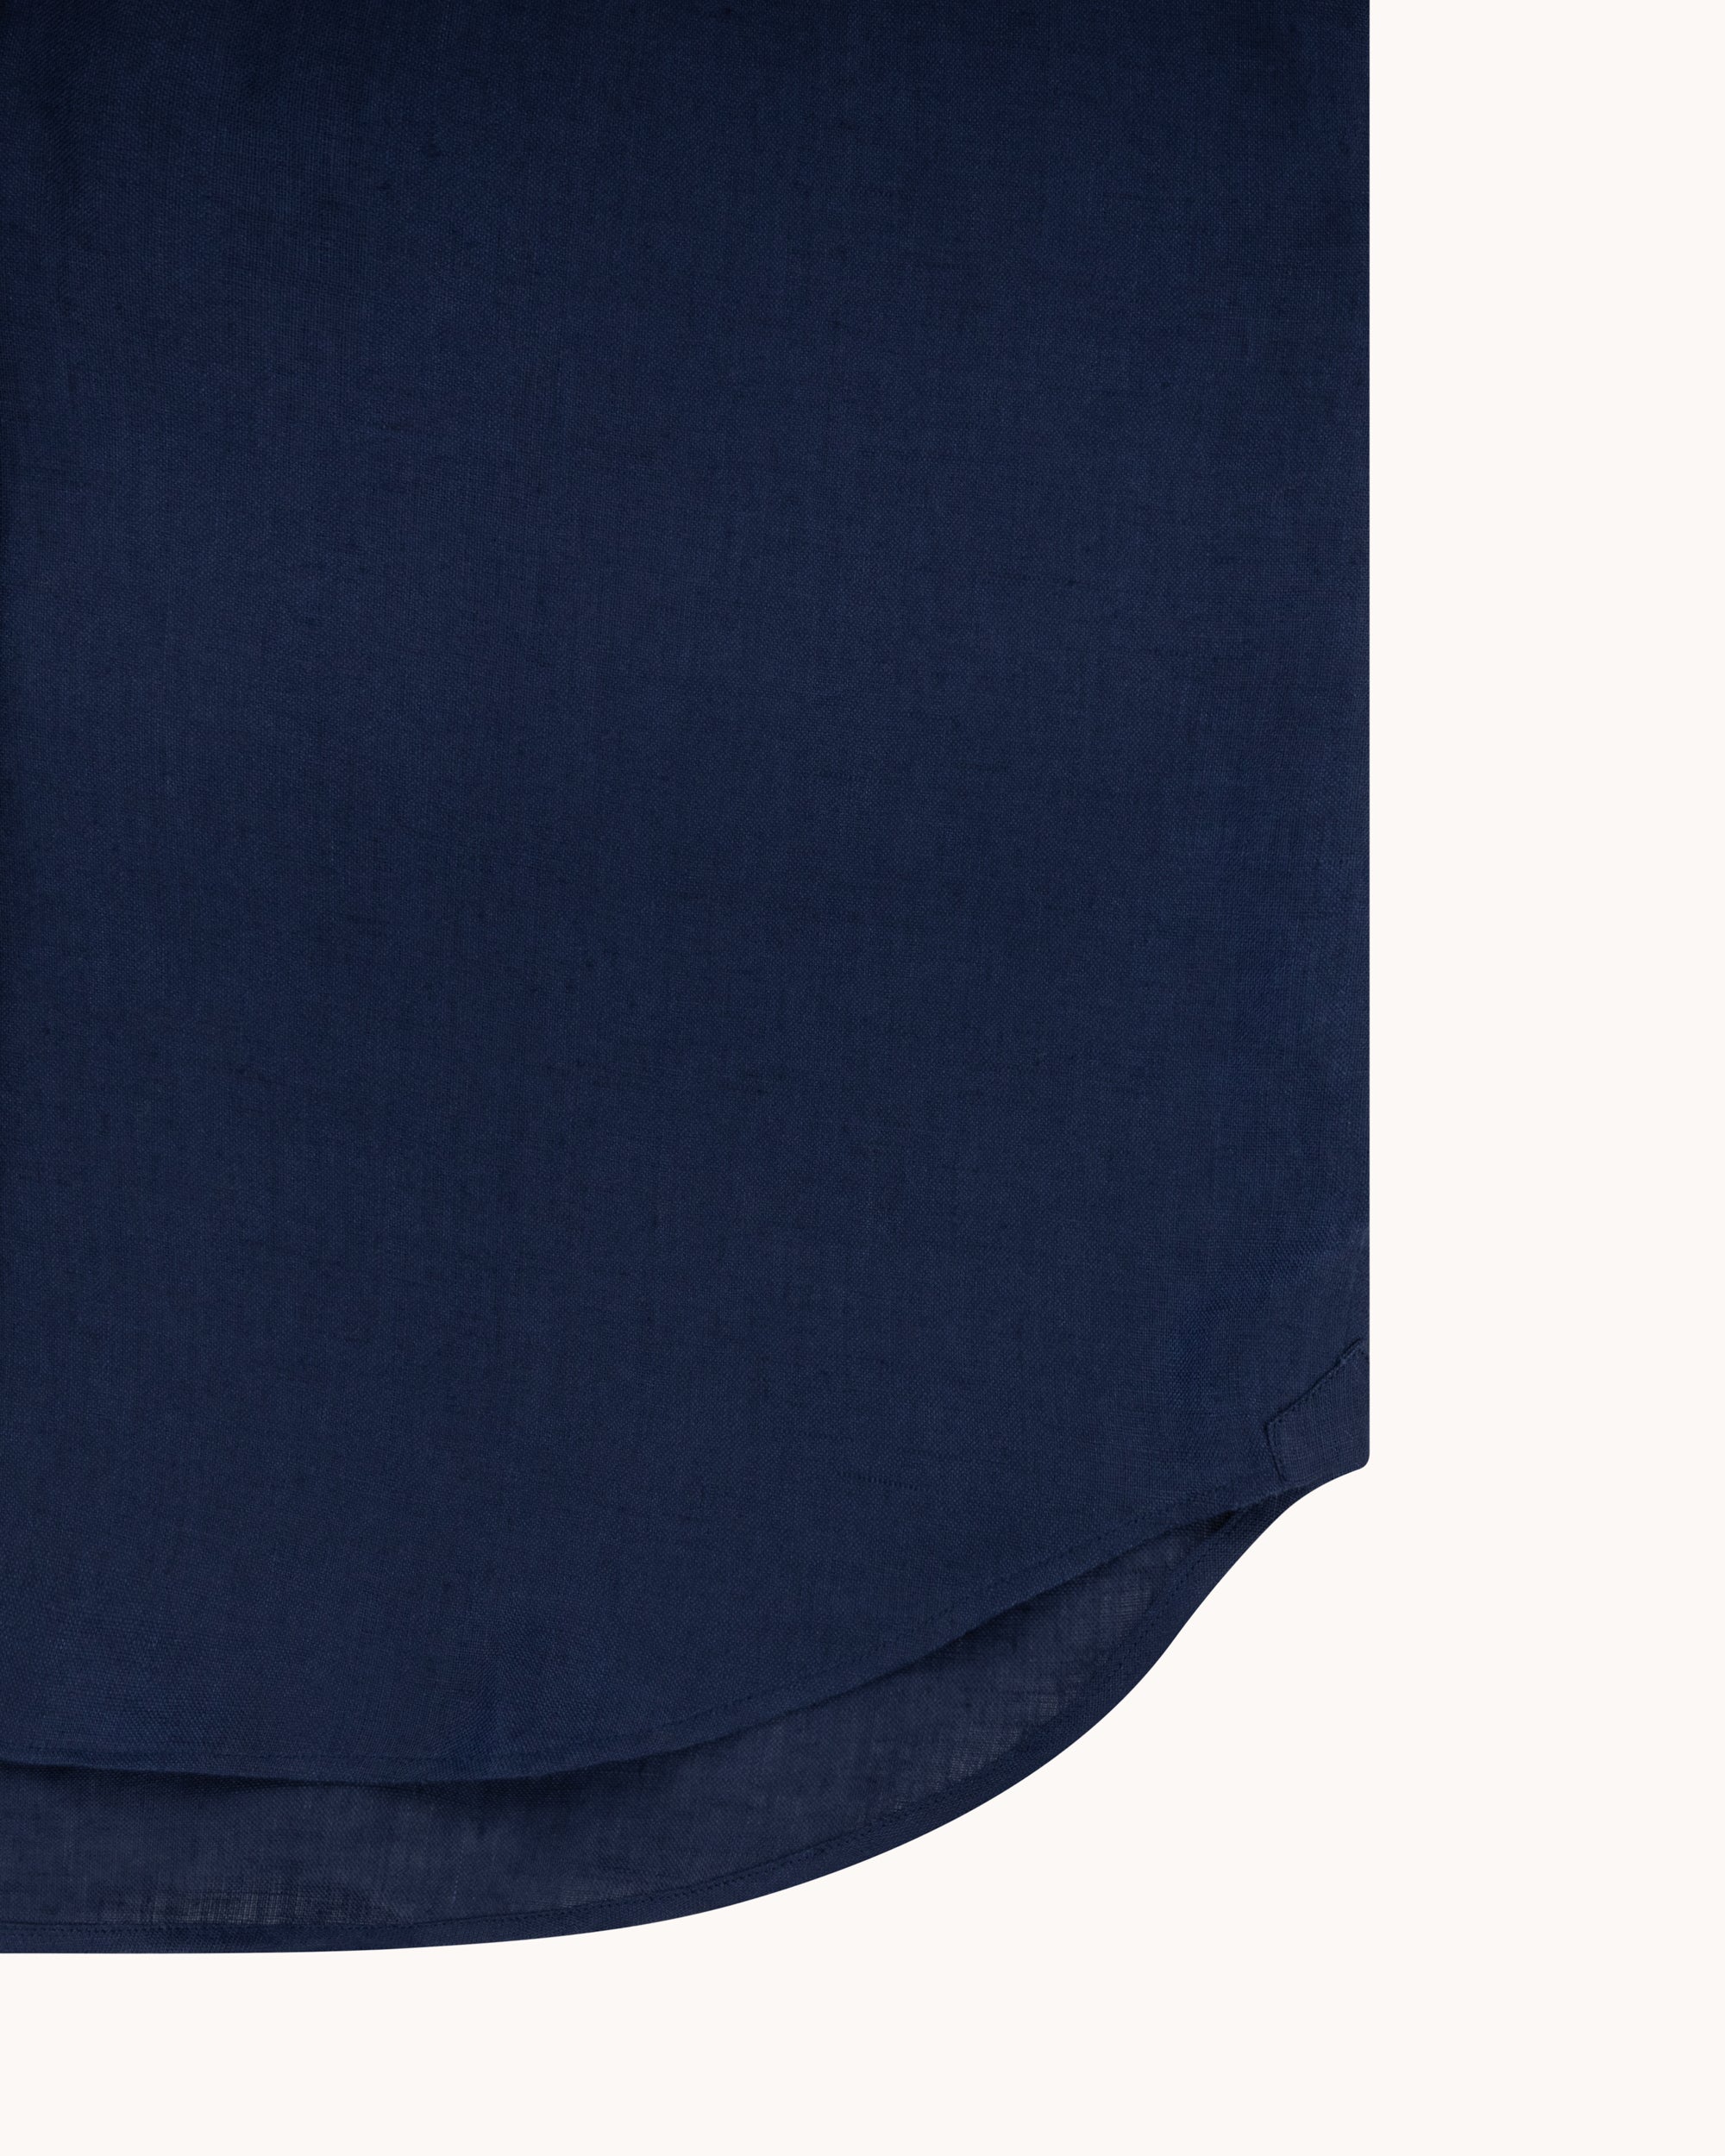 Spread Collar Shirt - Navy Linen